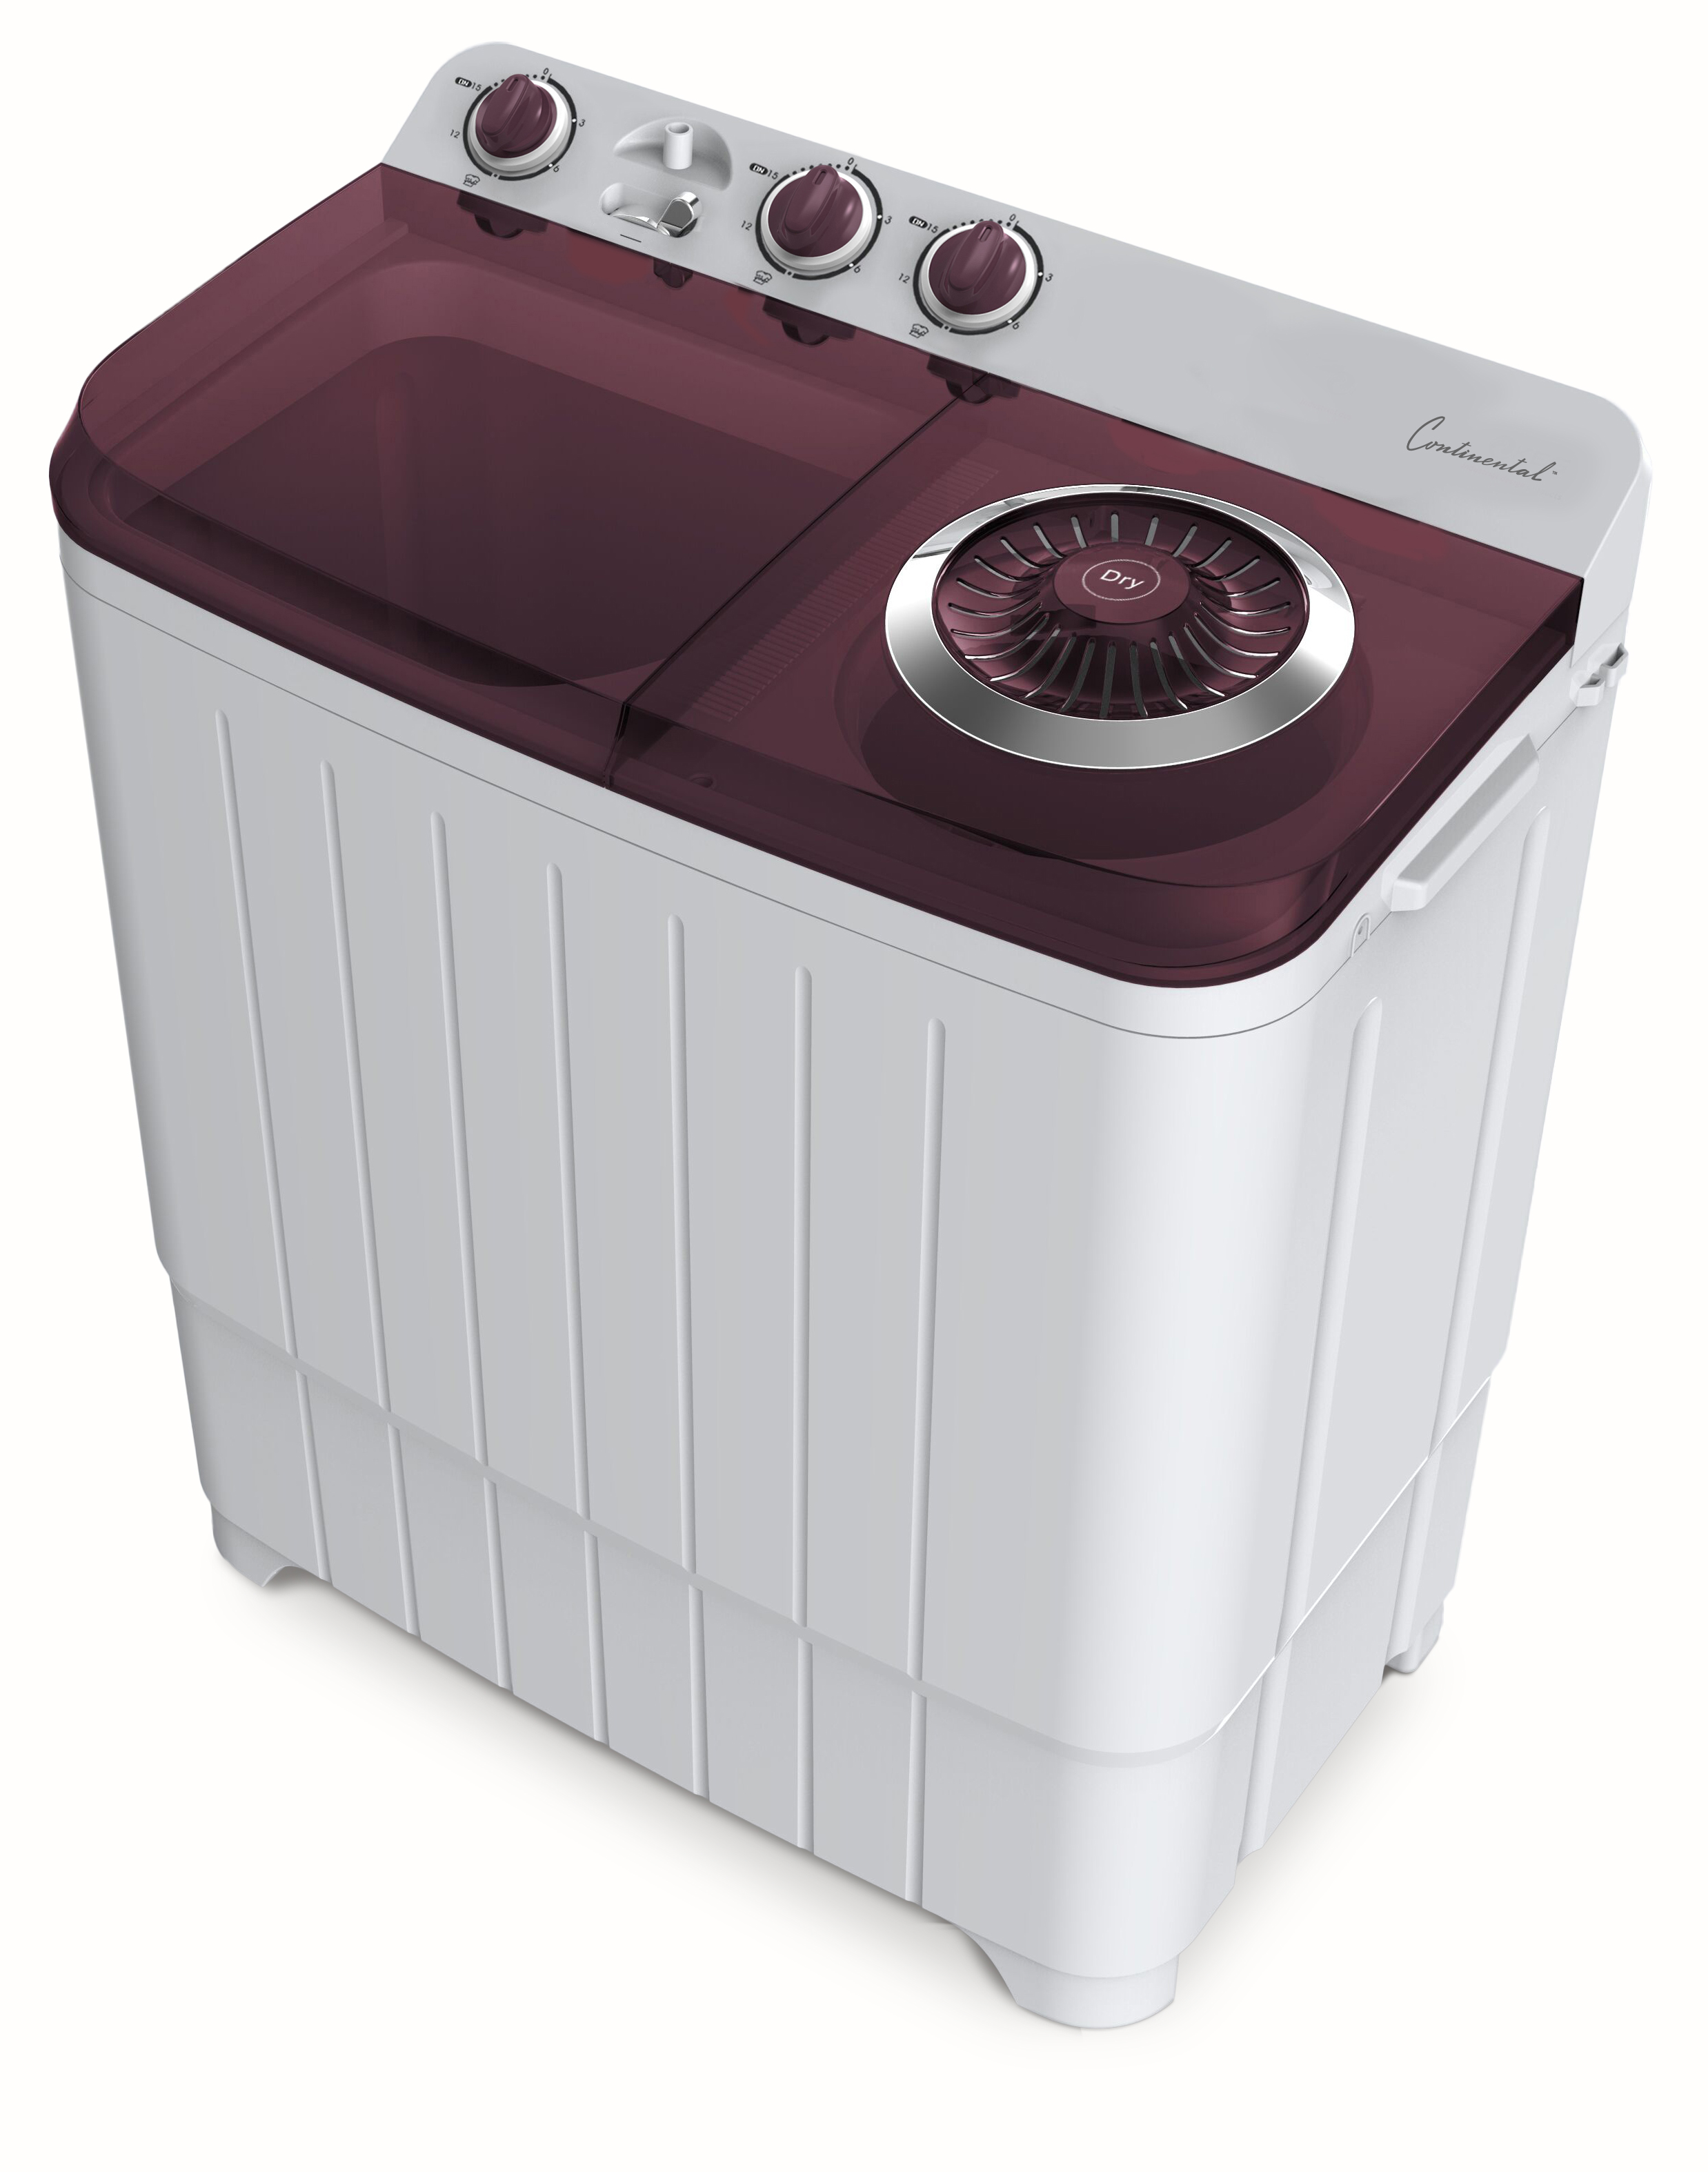 Twin Tub Washing Machine 11 Kg Capacity